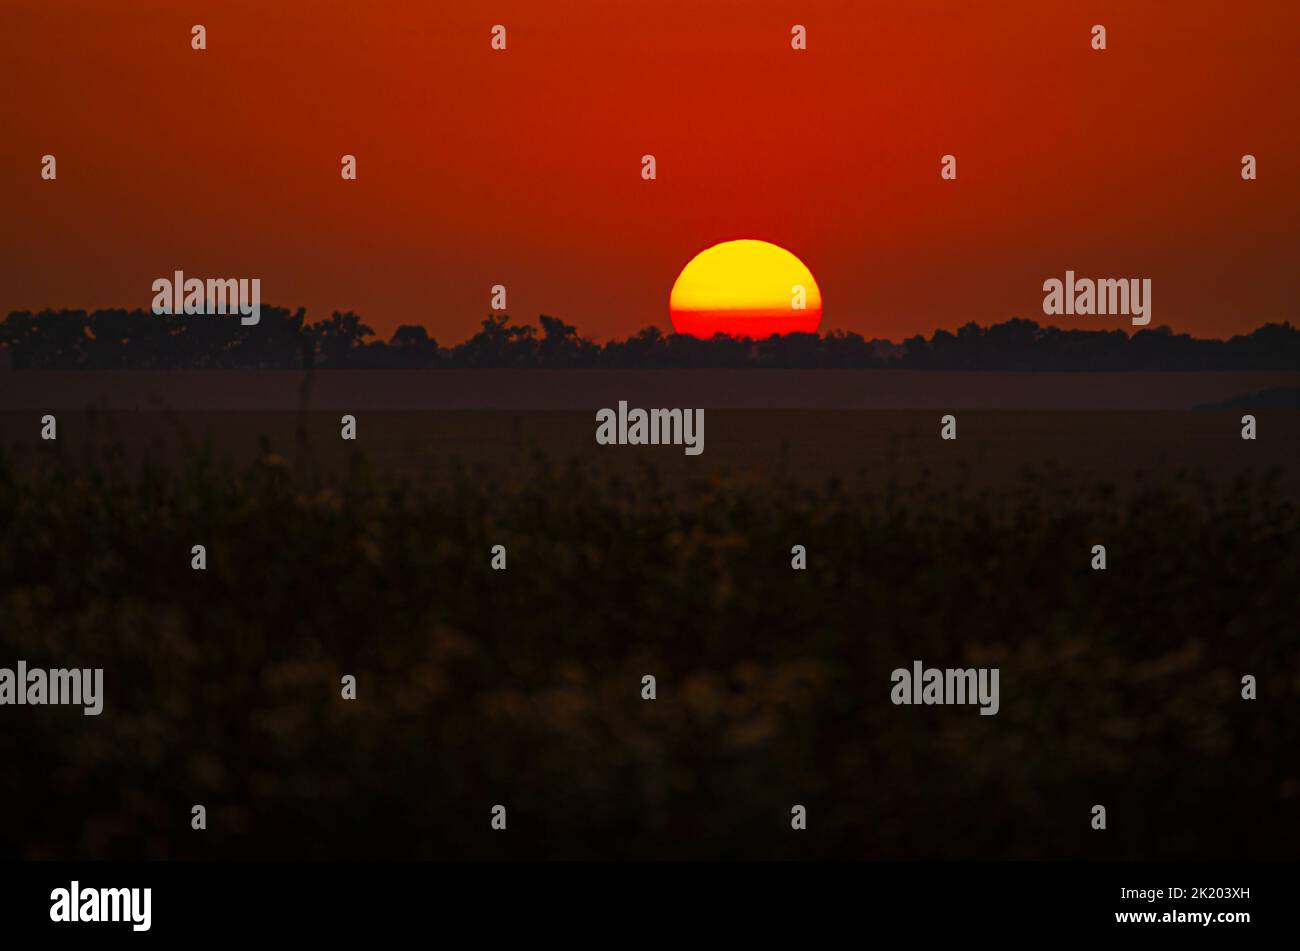 Dry grass blowballs on evening sunset background Stock Photo